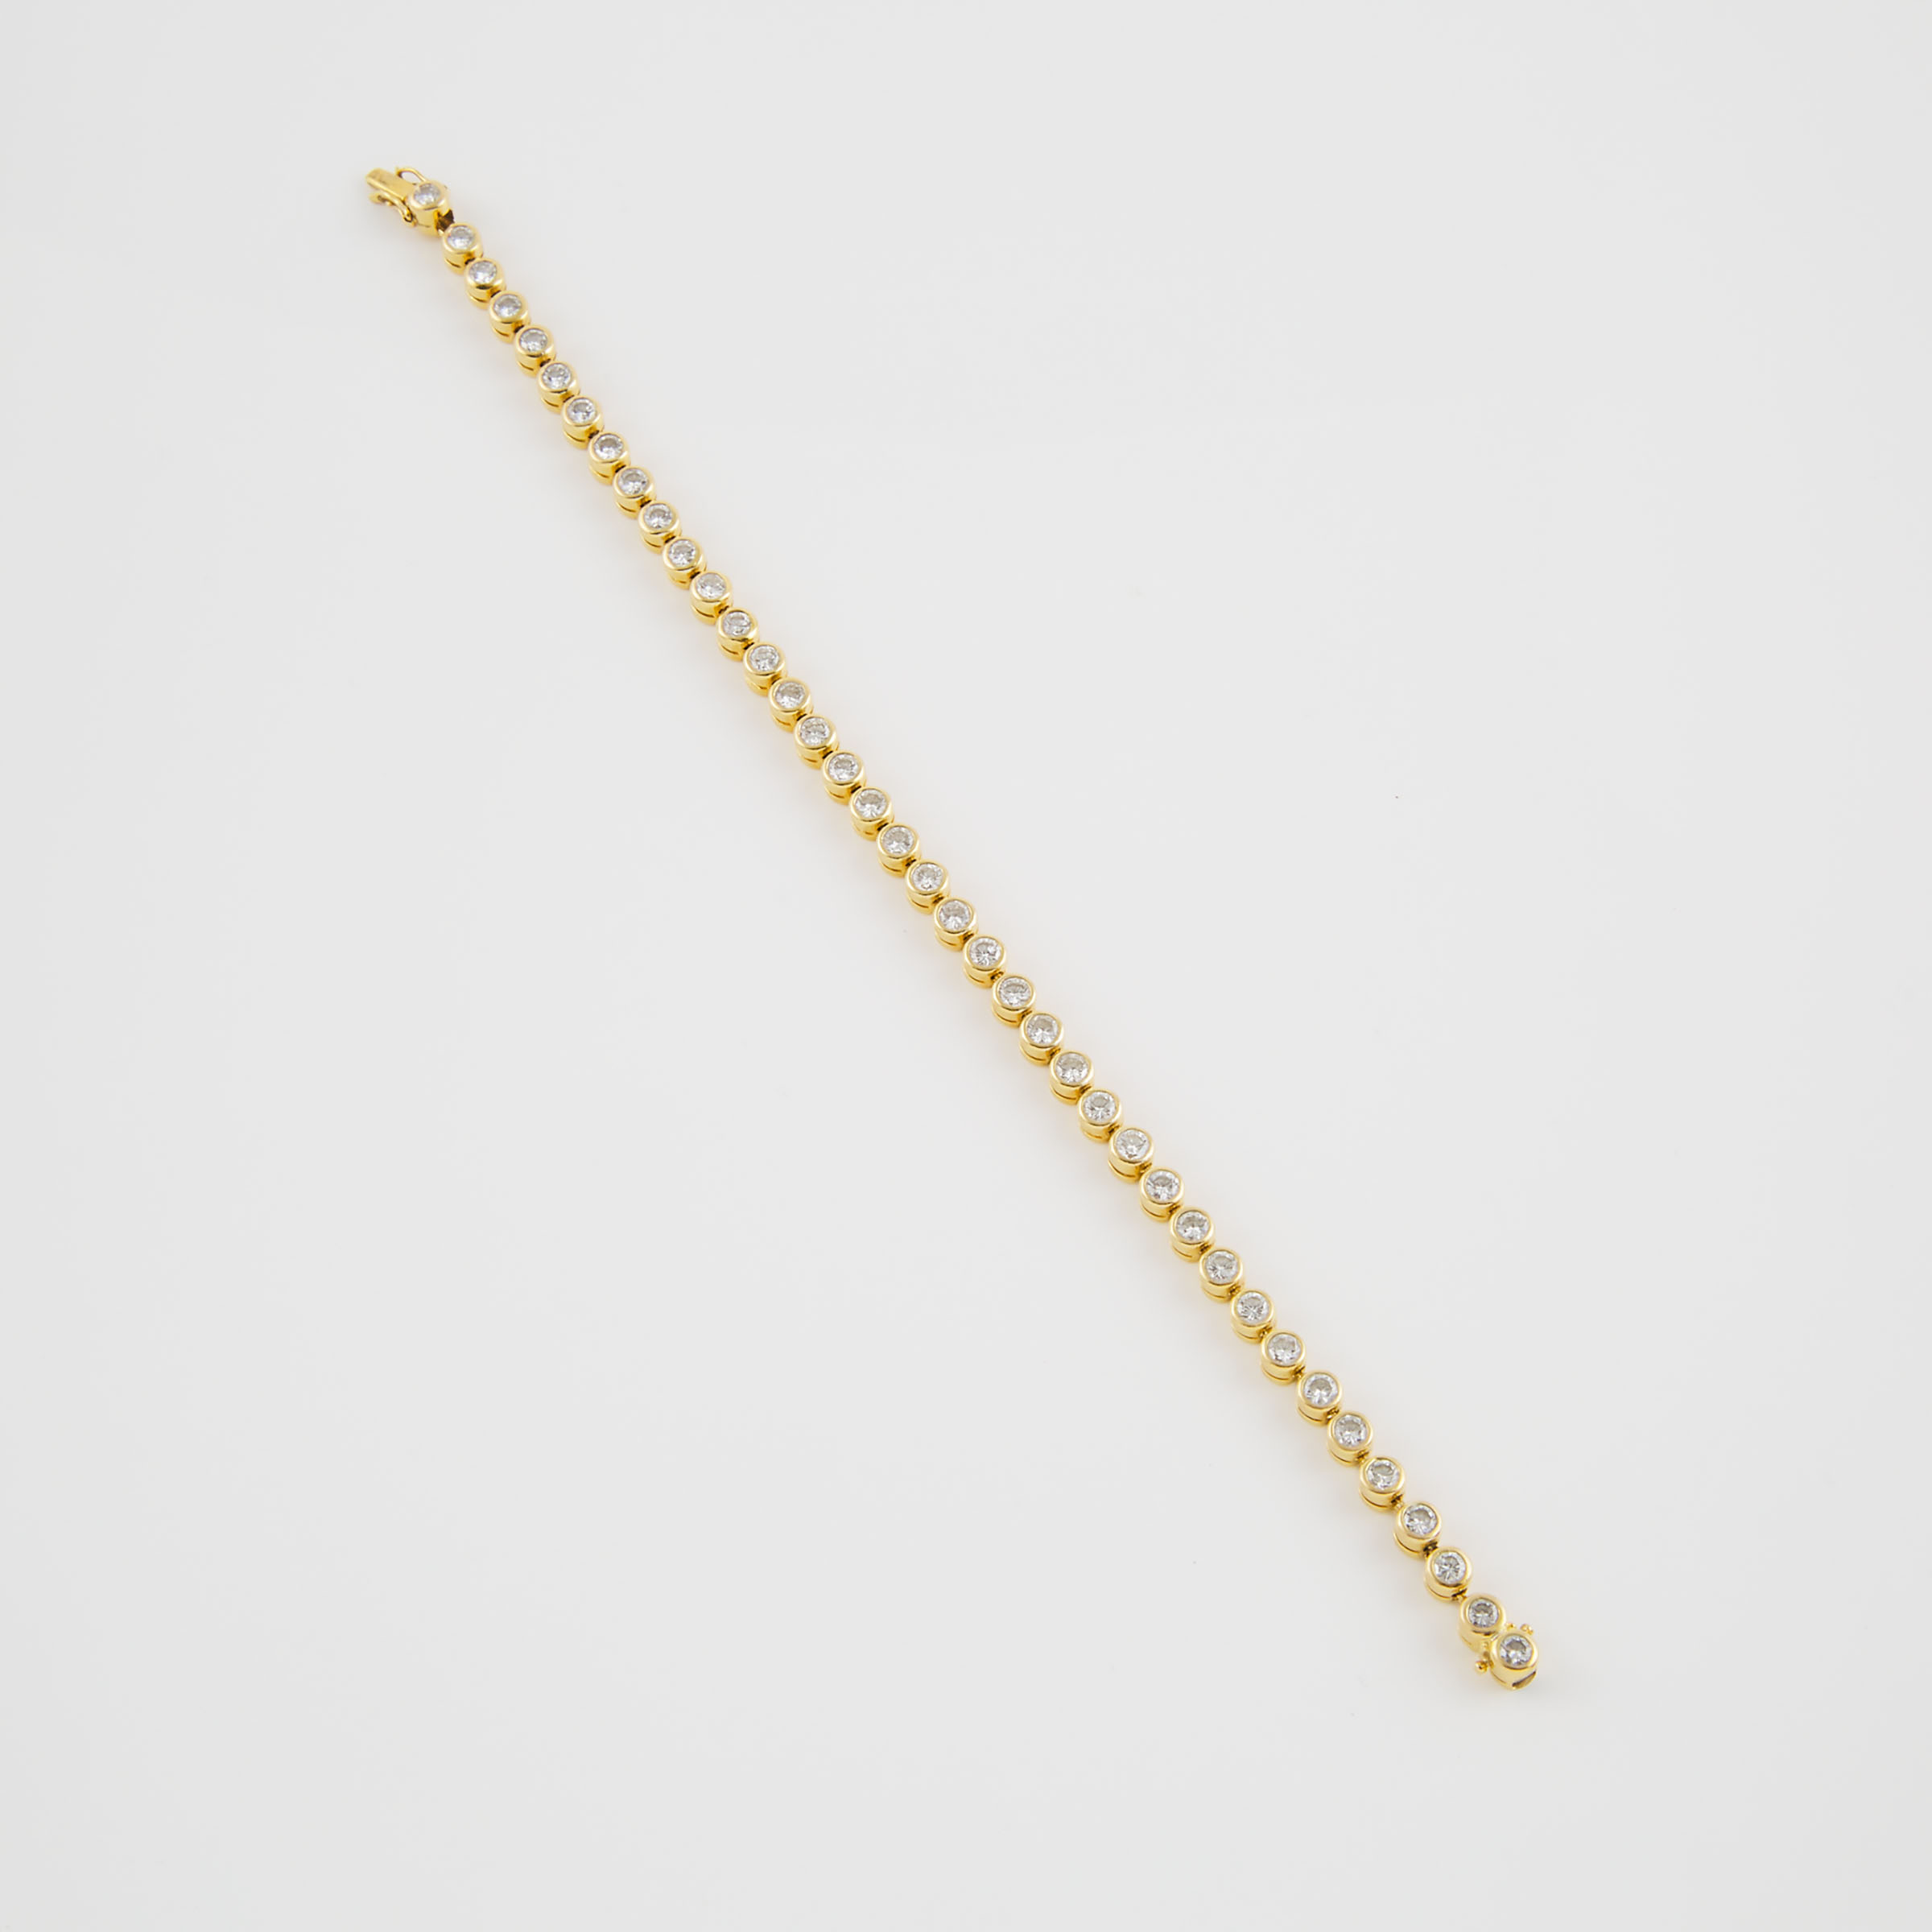 Ming's 18k Yellow Gold Bracelet